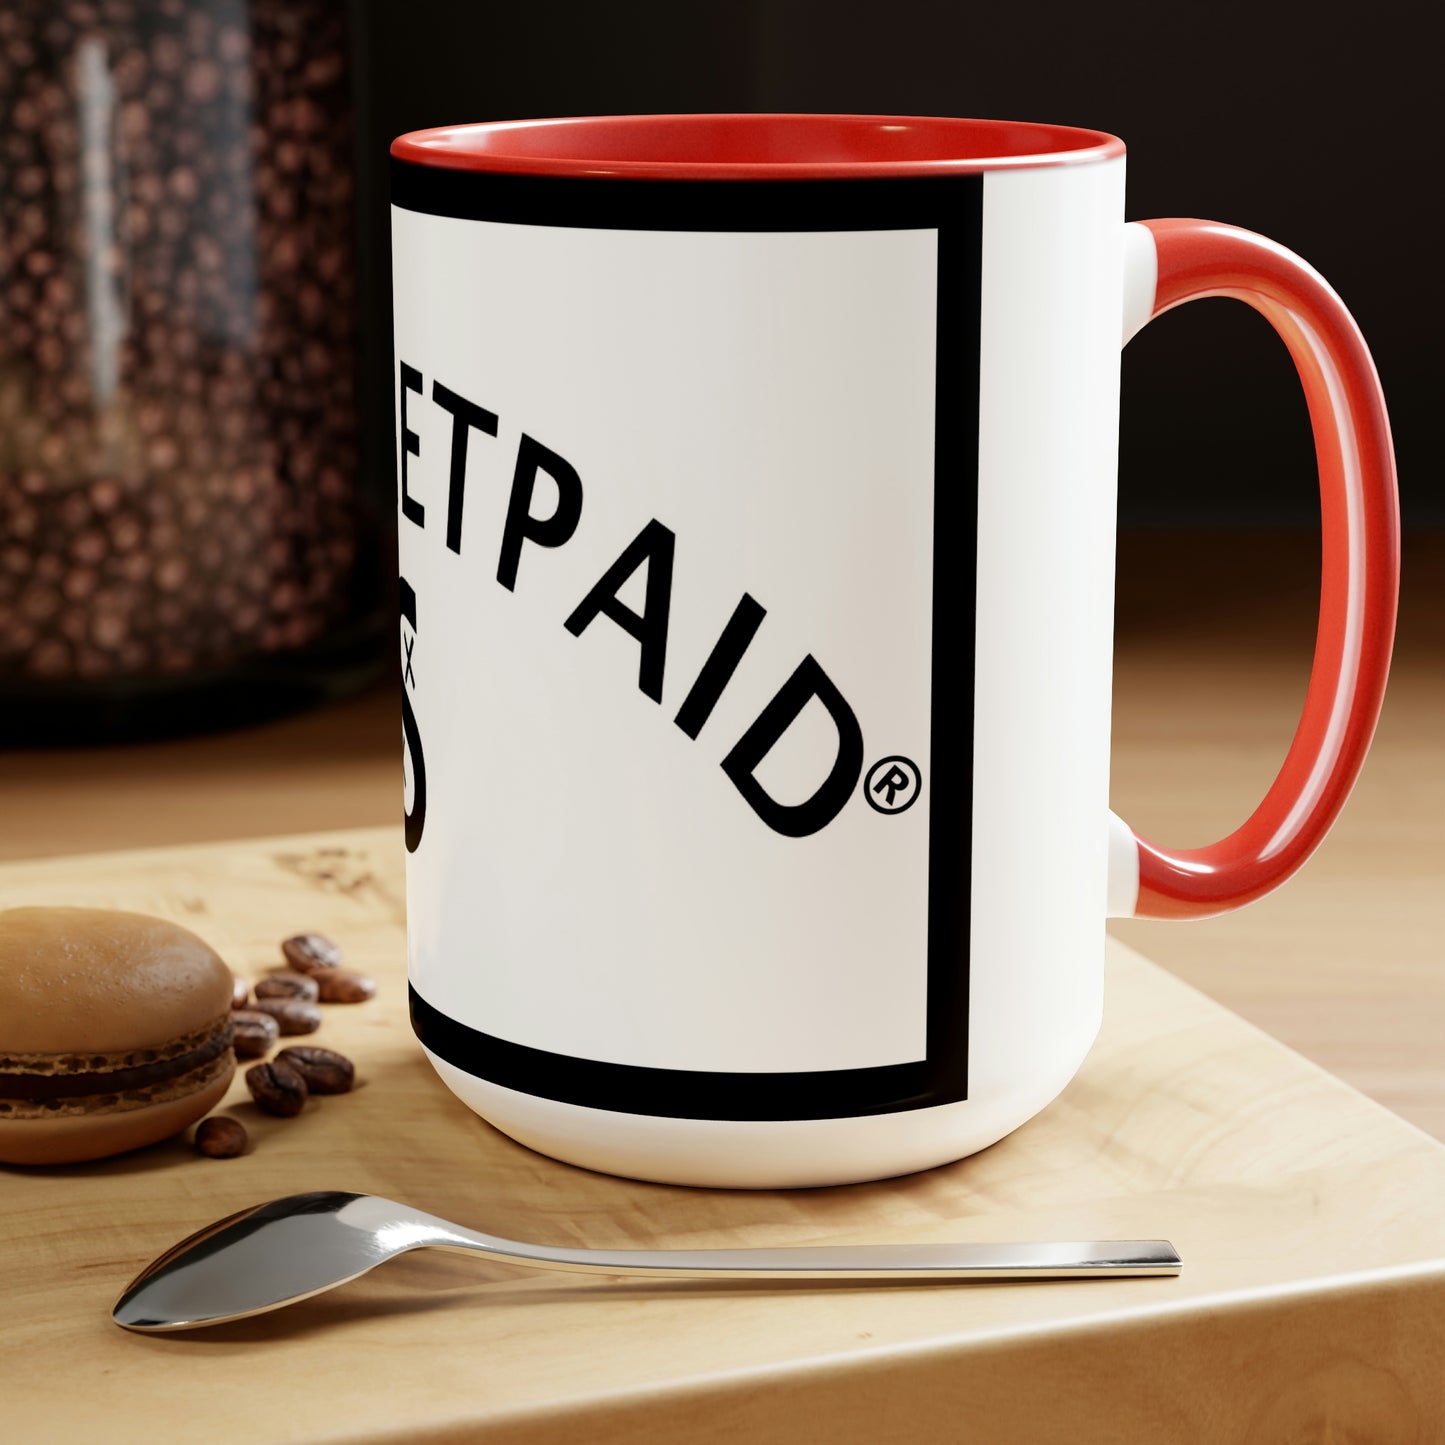 STILLGETPAID®️ APPAREL Two-Tone Coffee Mugs, 15oz